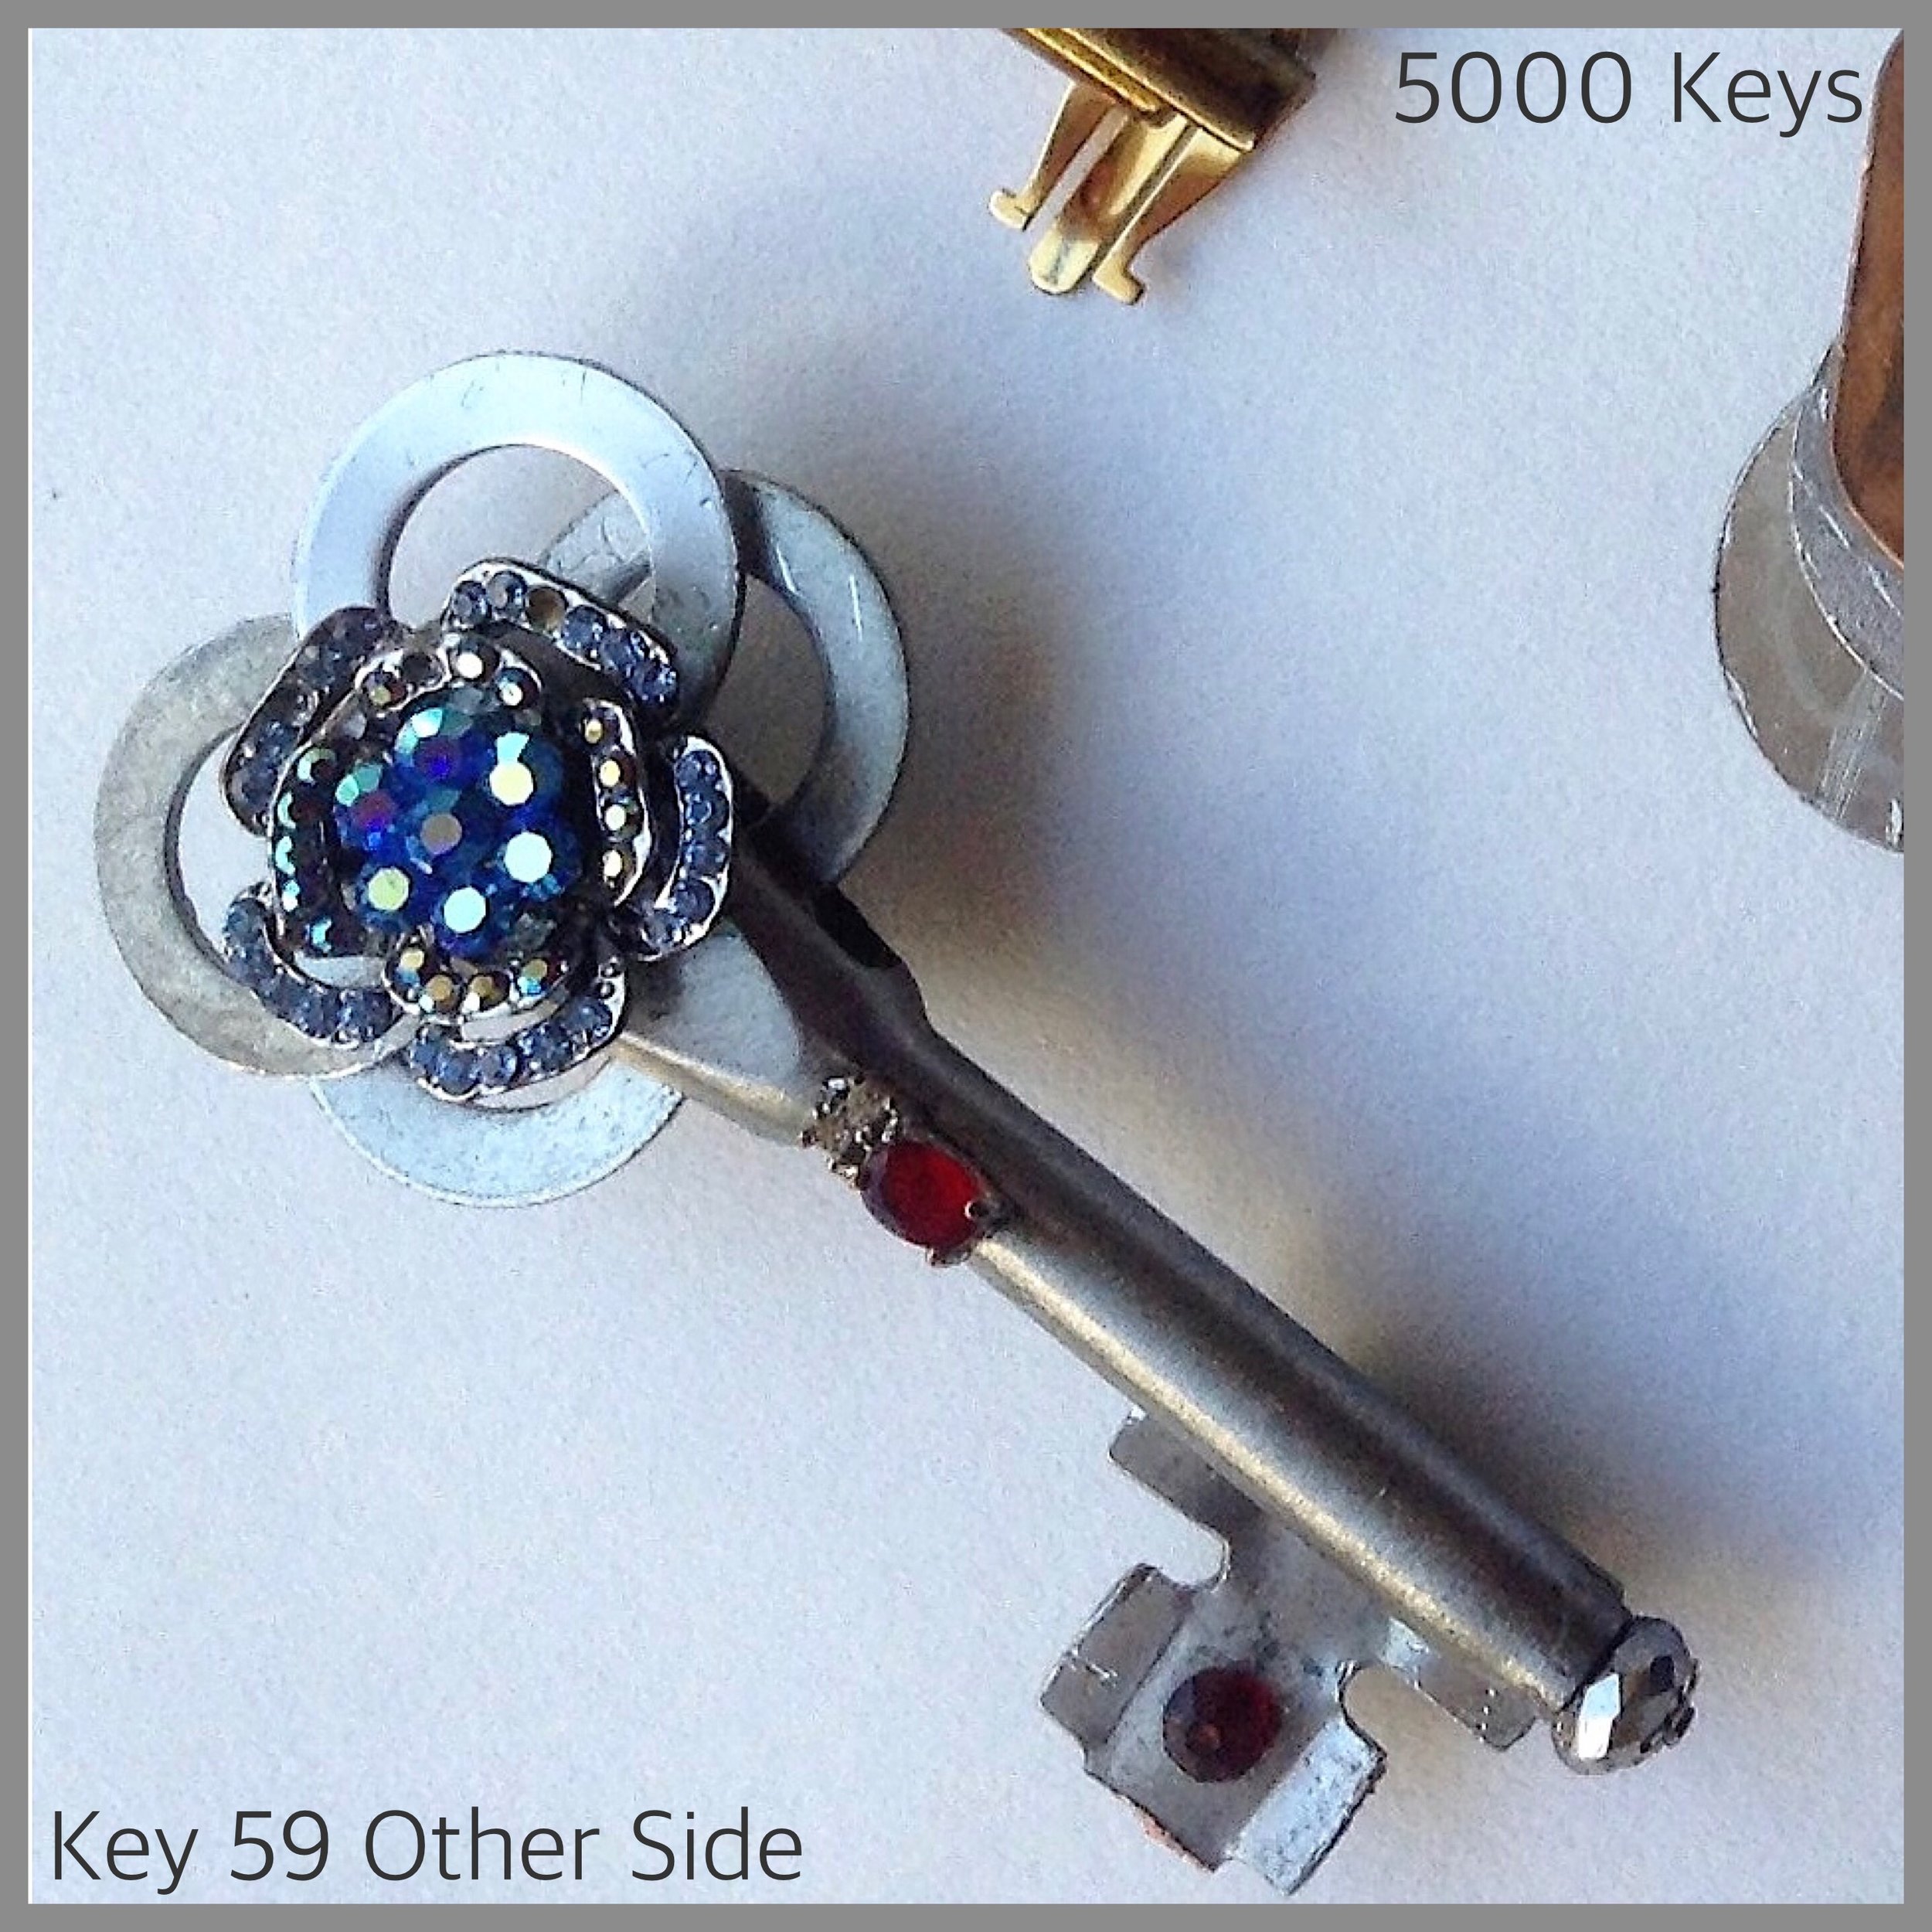 Key 59 Other side - 1.JPG